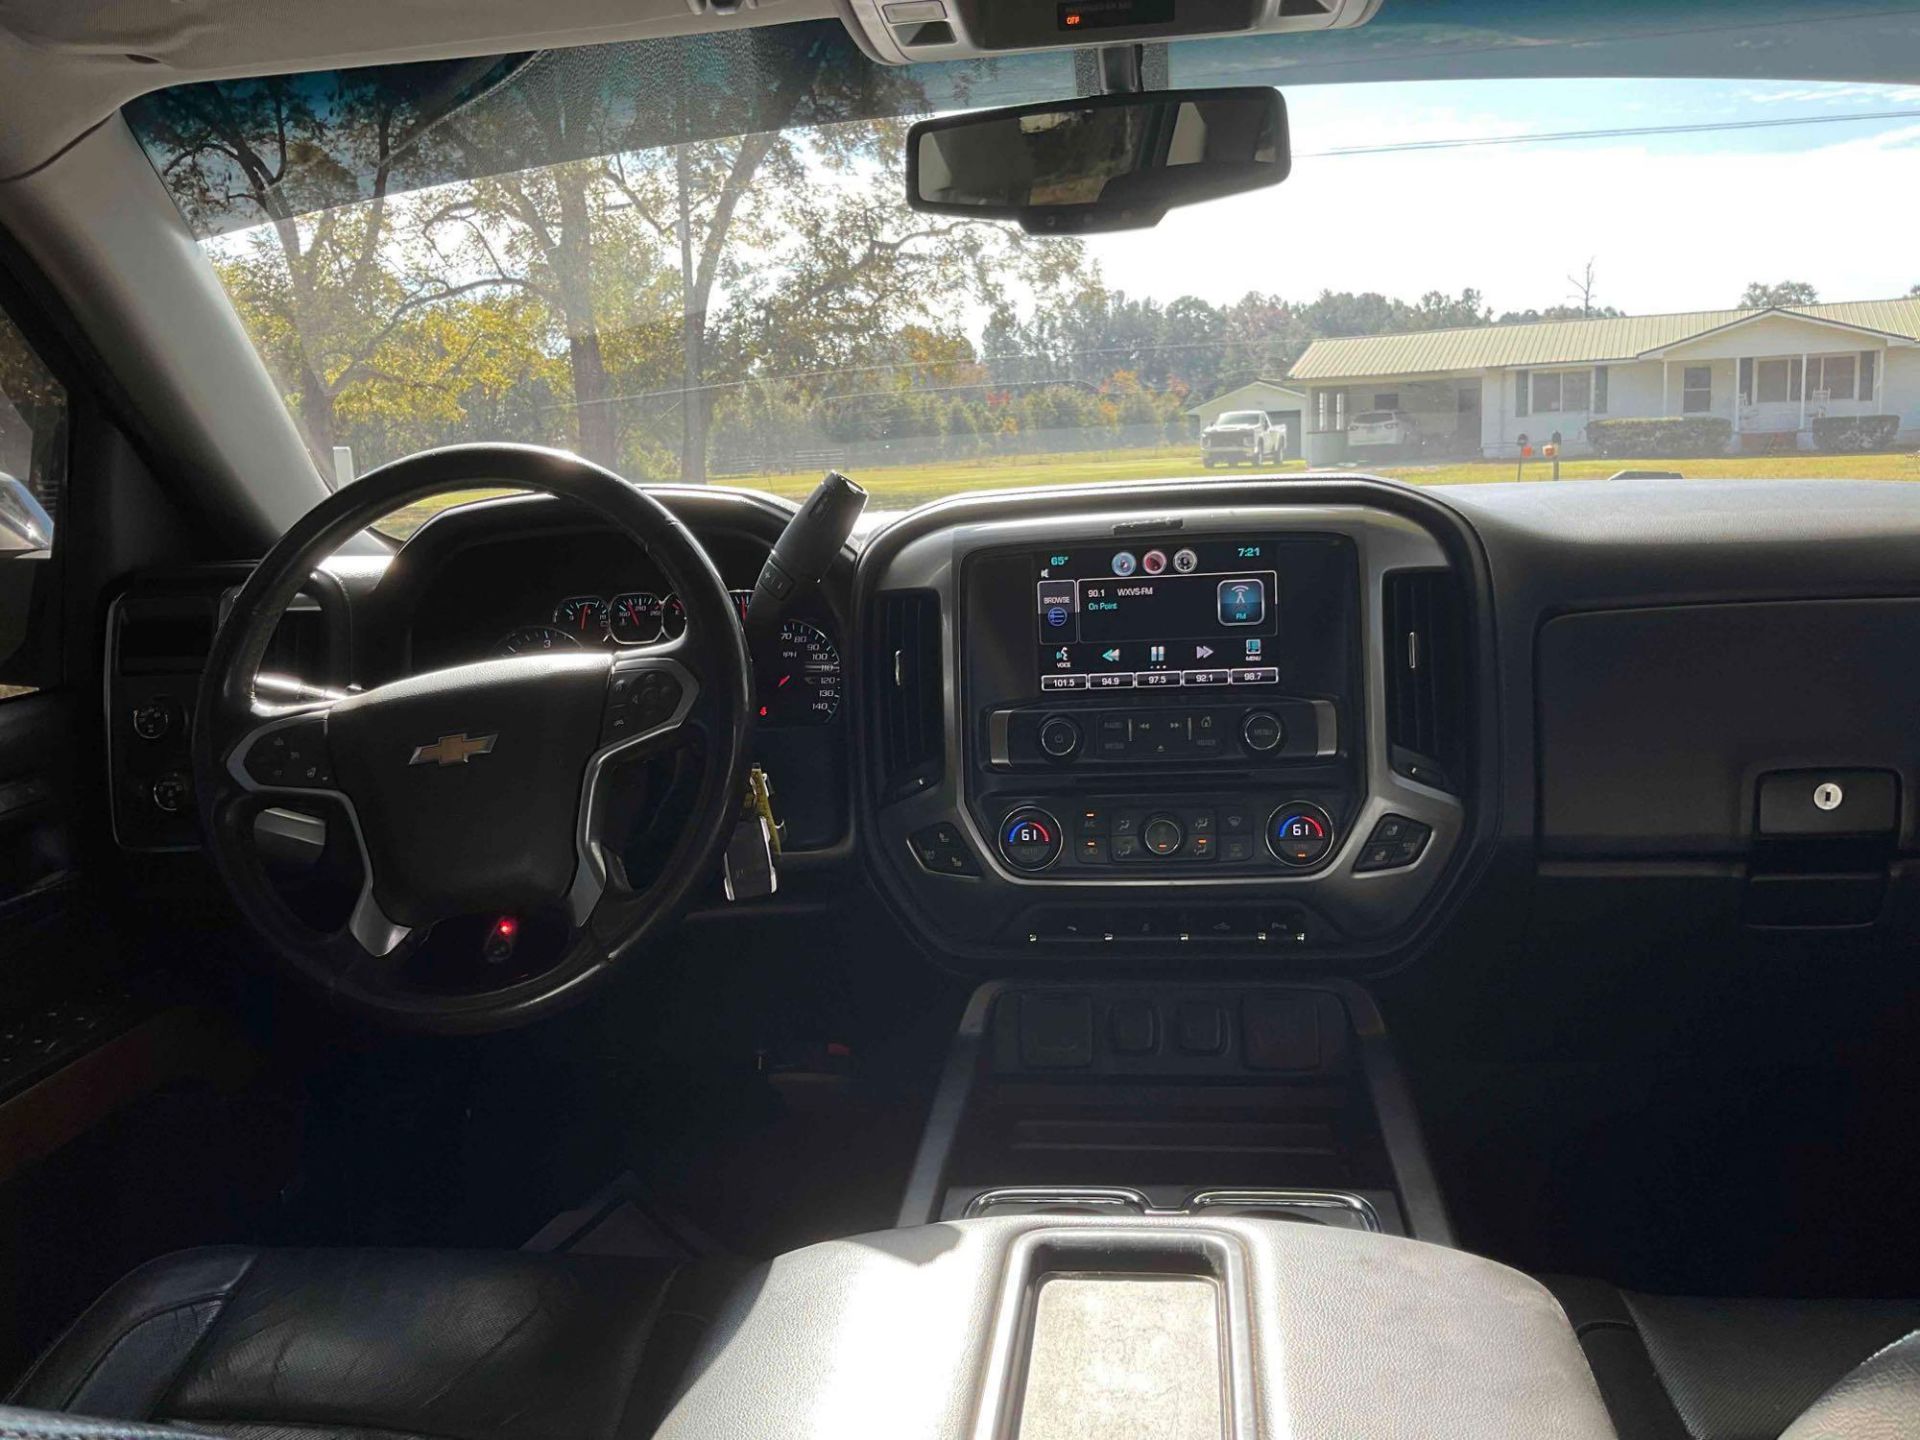 2014 Chevrolet Silverado 1500 Crew Cab 4x4 Pickup Truck - Image 28 of 58